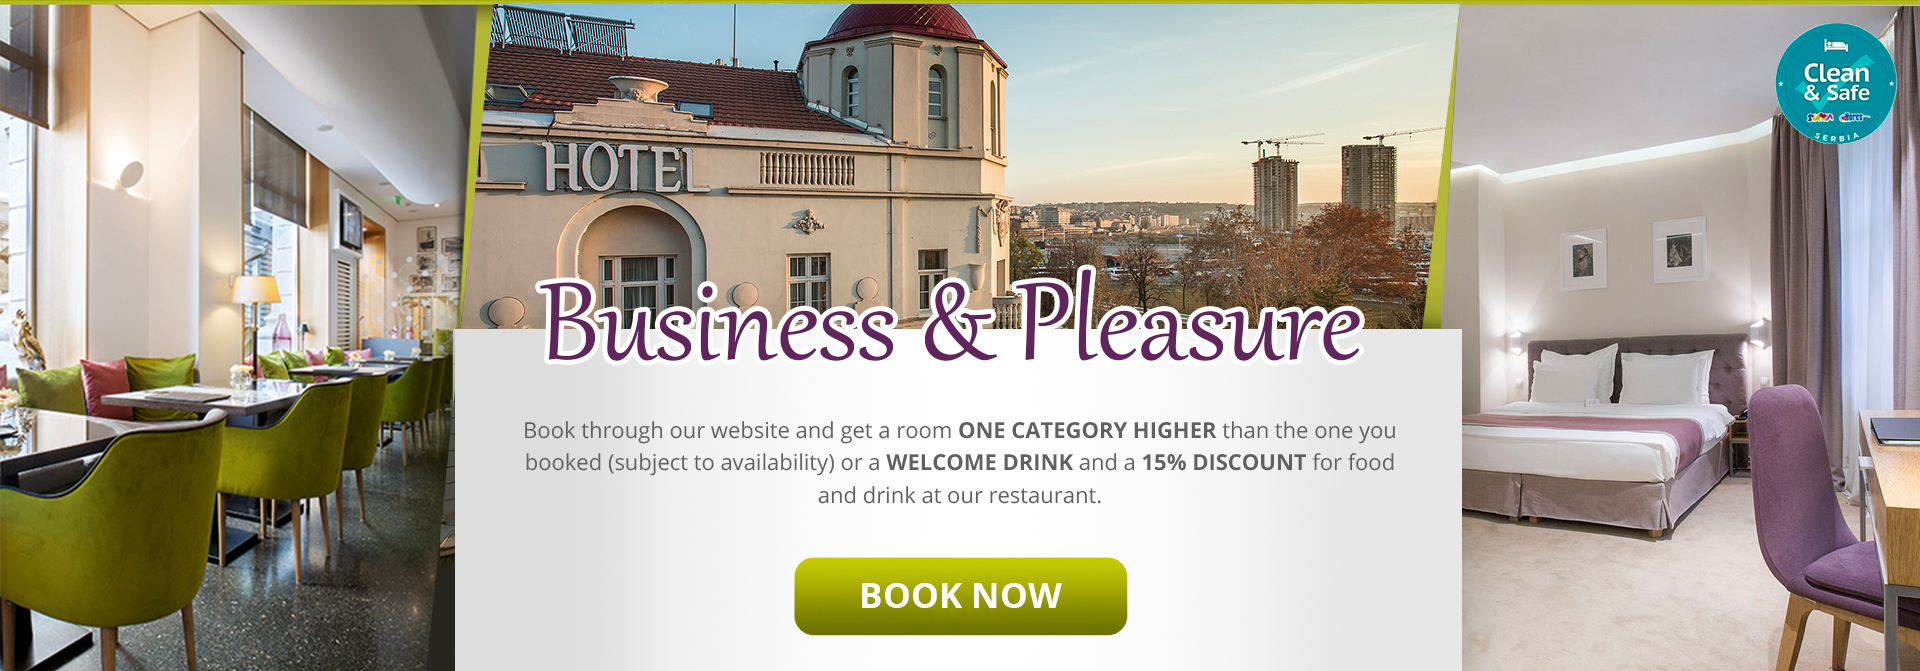 Jump Inn Business and Pleasure